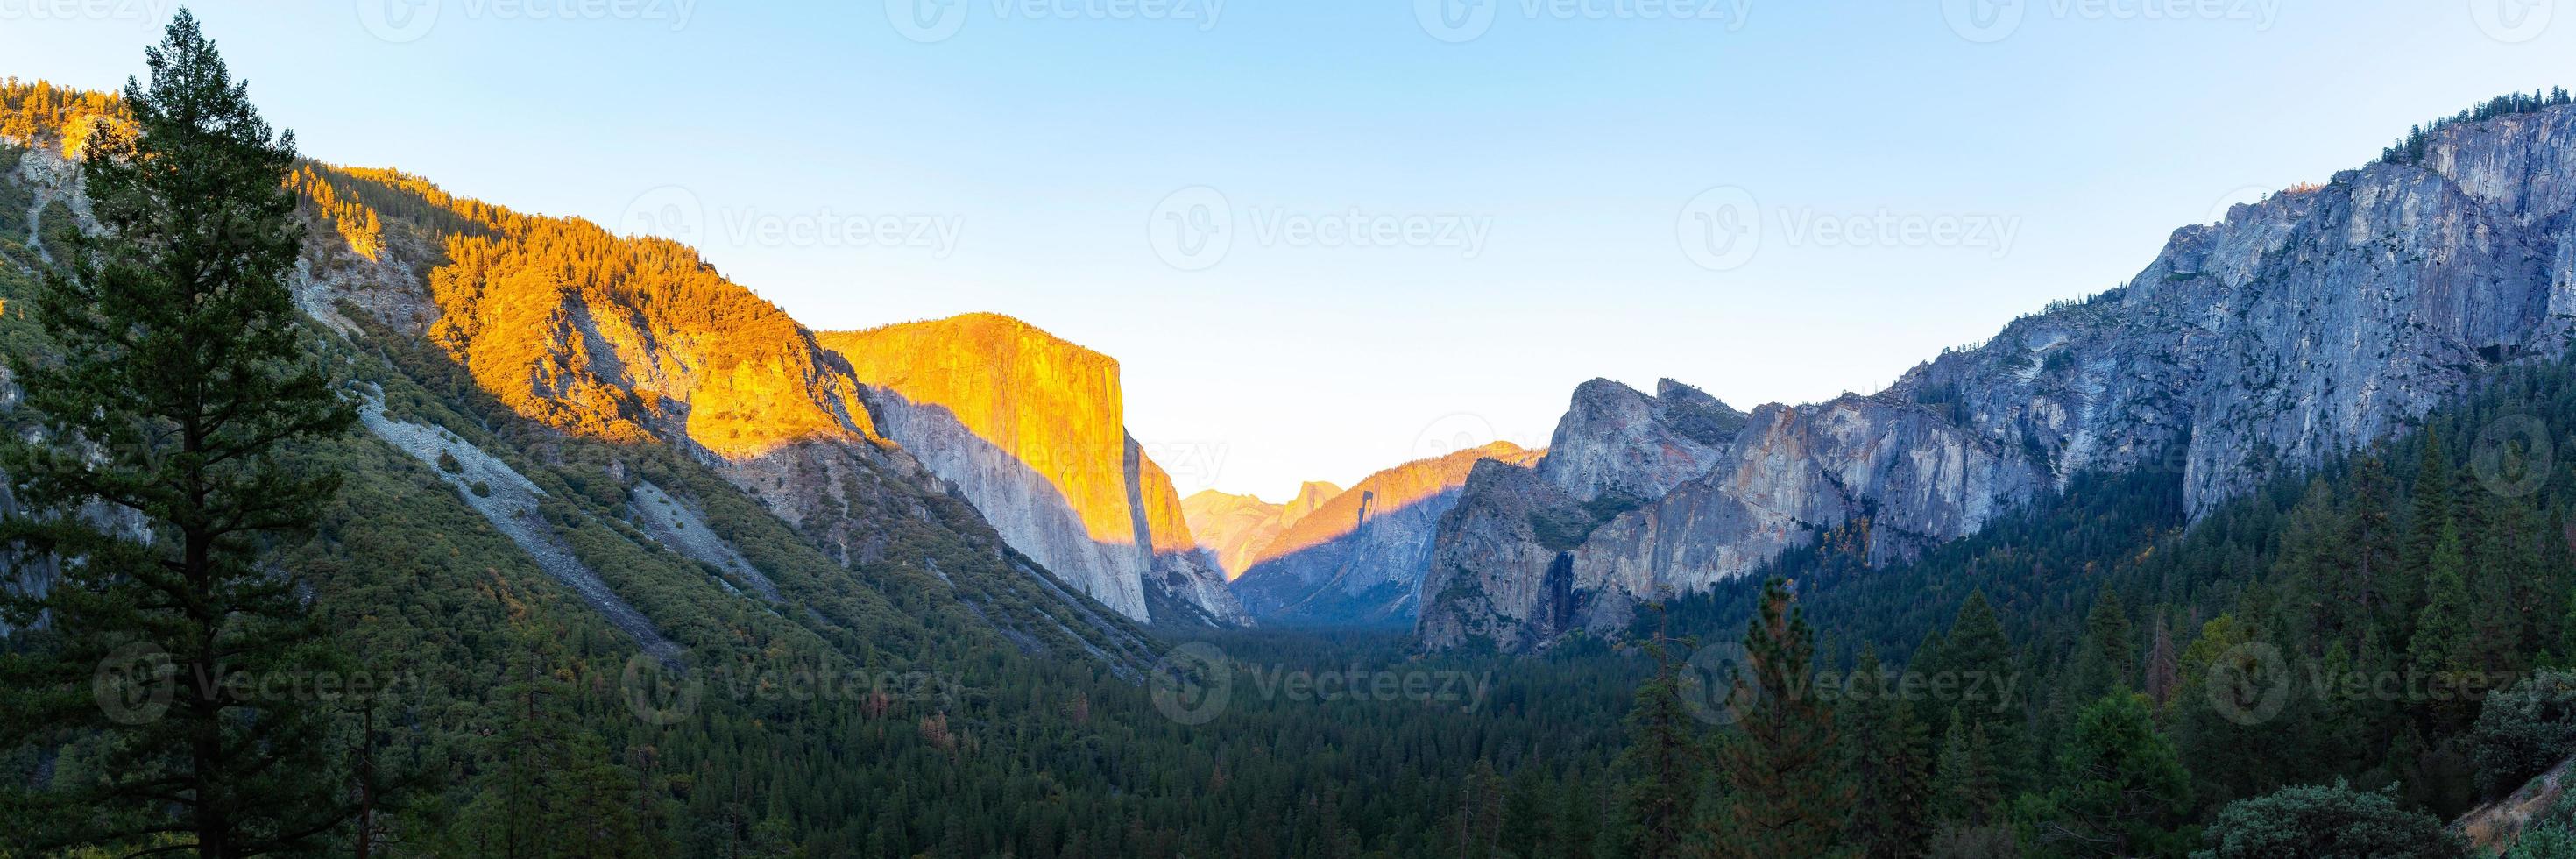 Yosemite National Park under solnedgången, Kalifornien, USA foto